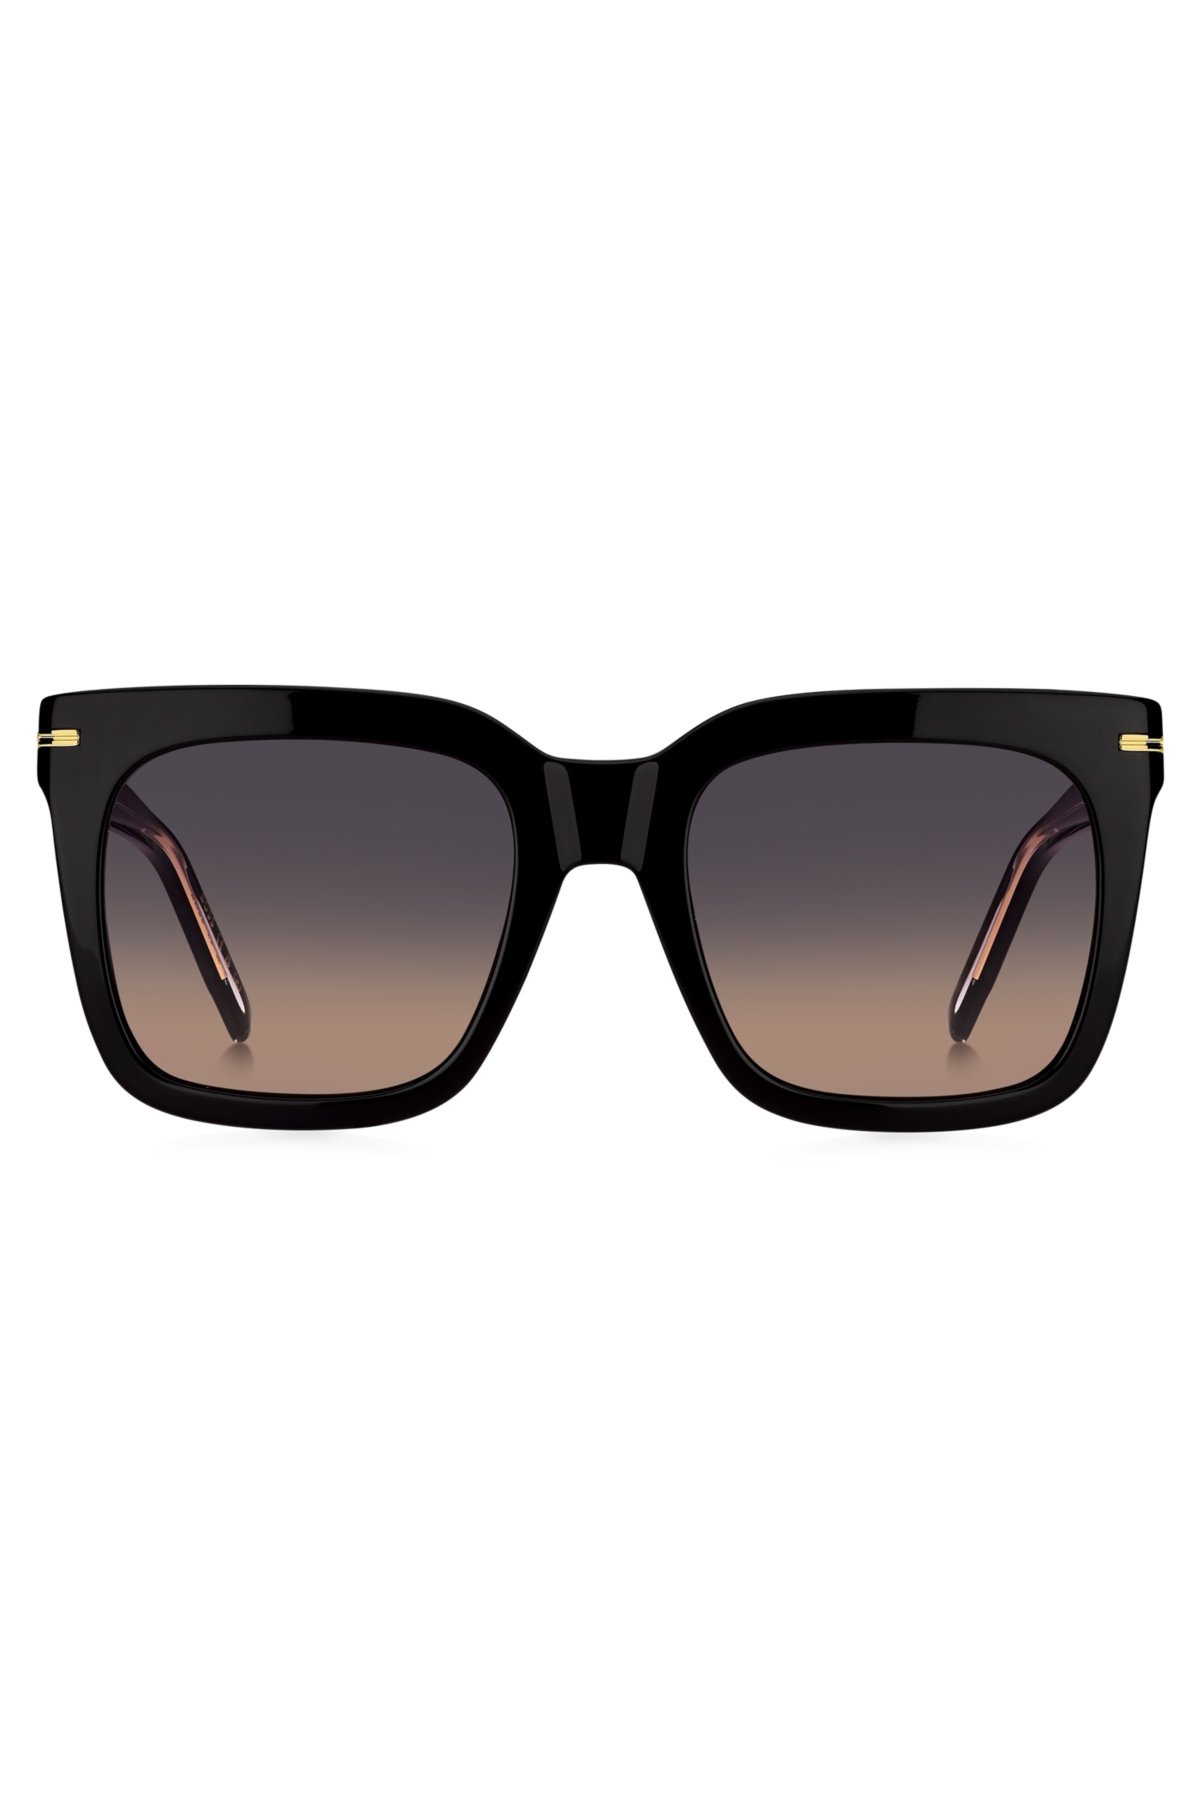 Black-acetate sunglasses with gold-tone hardware, Black